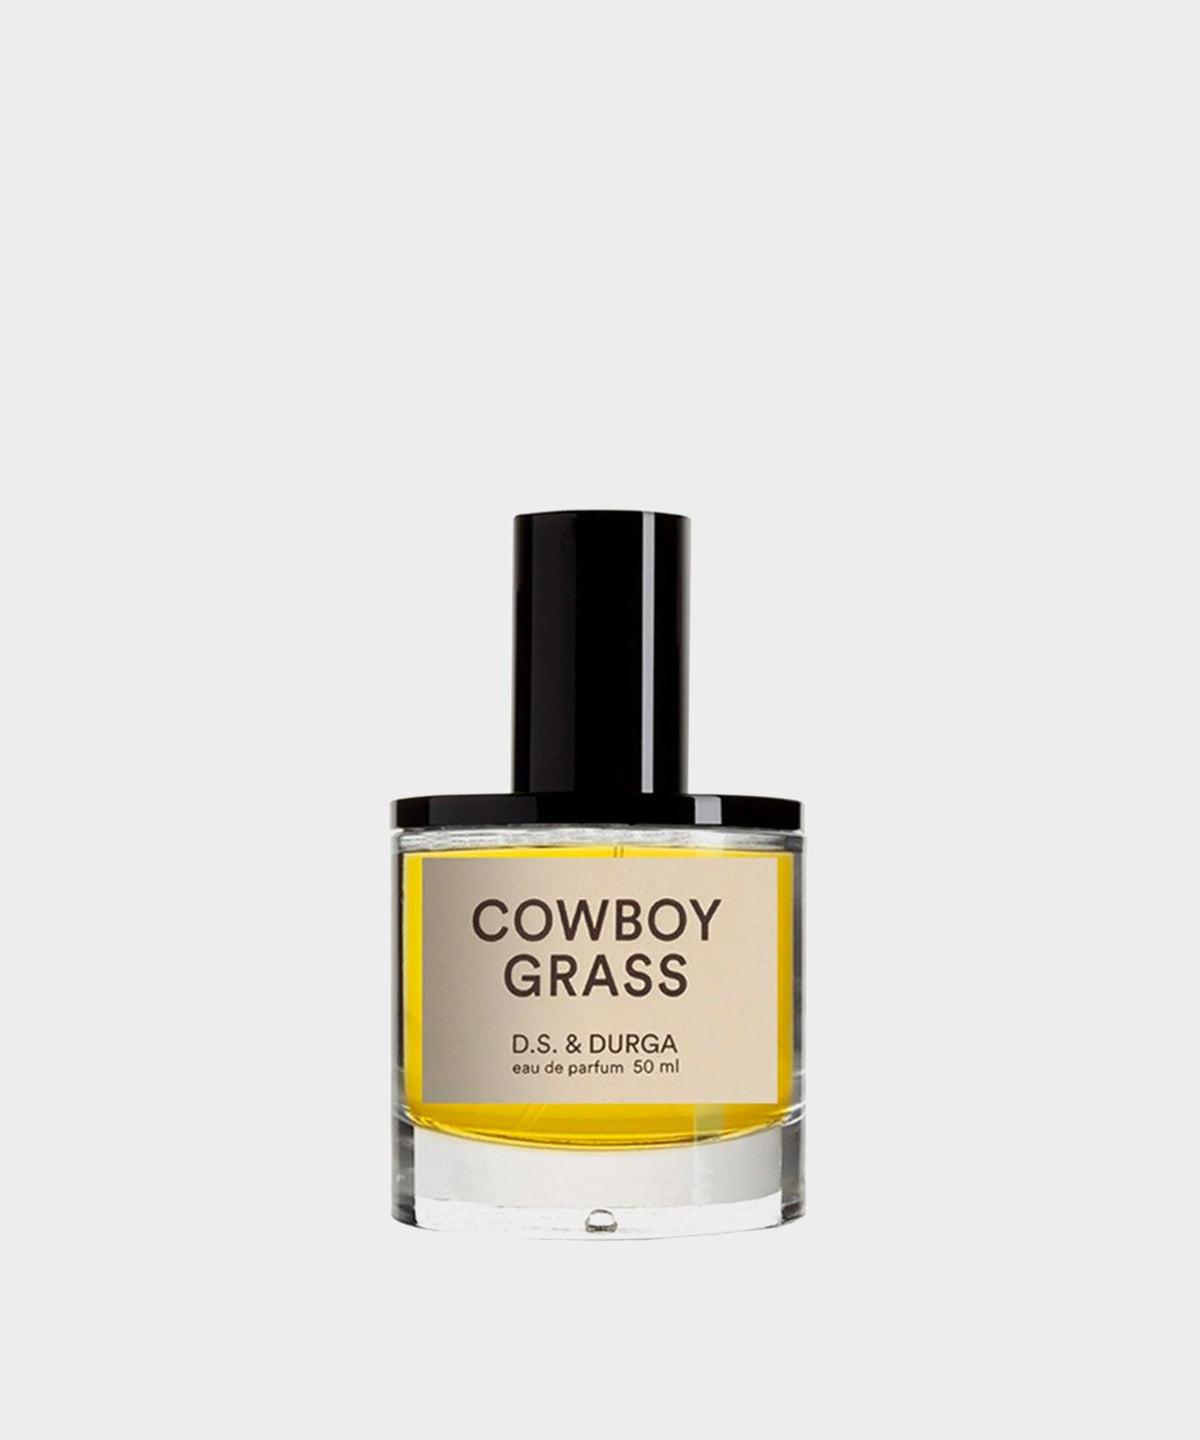 D.S. & Durga Cowboy Grass Fragrance in 50ml